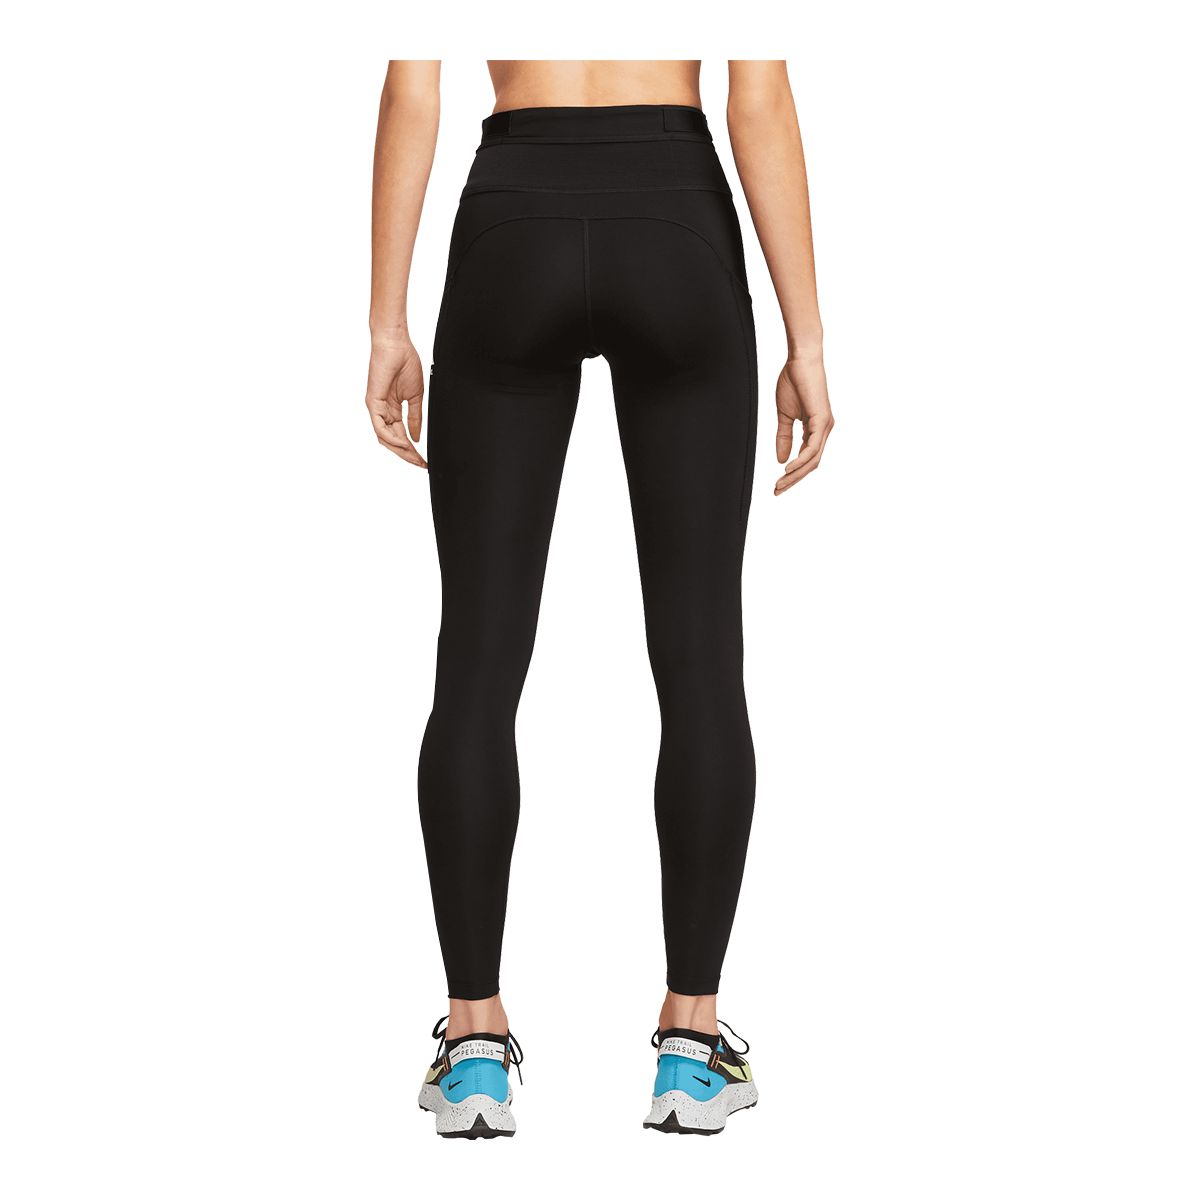 Nike Women's Epic Lux 27.5 Light Grey Mesh Running Tights (842923-012)  Size M